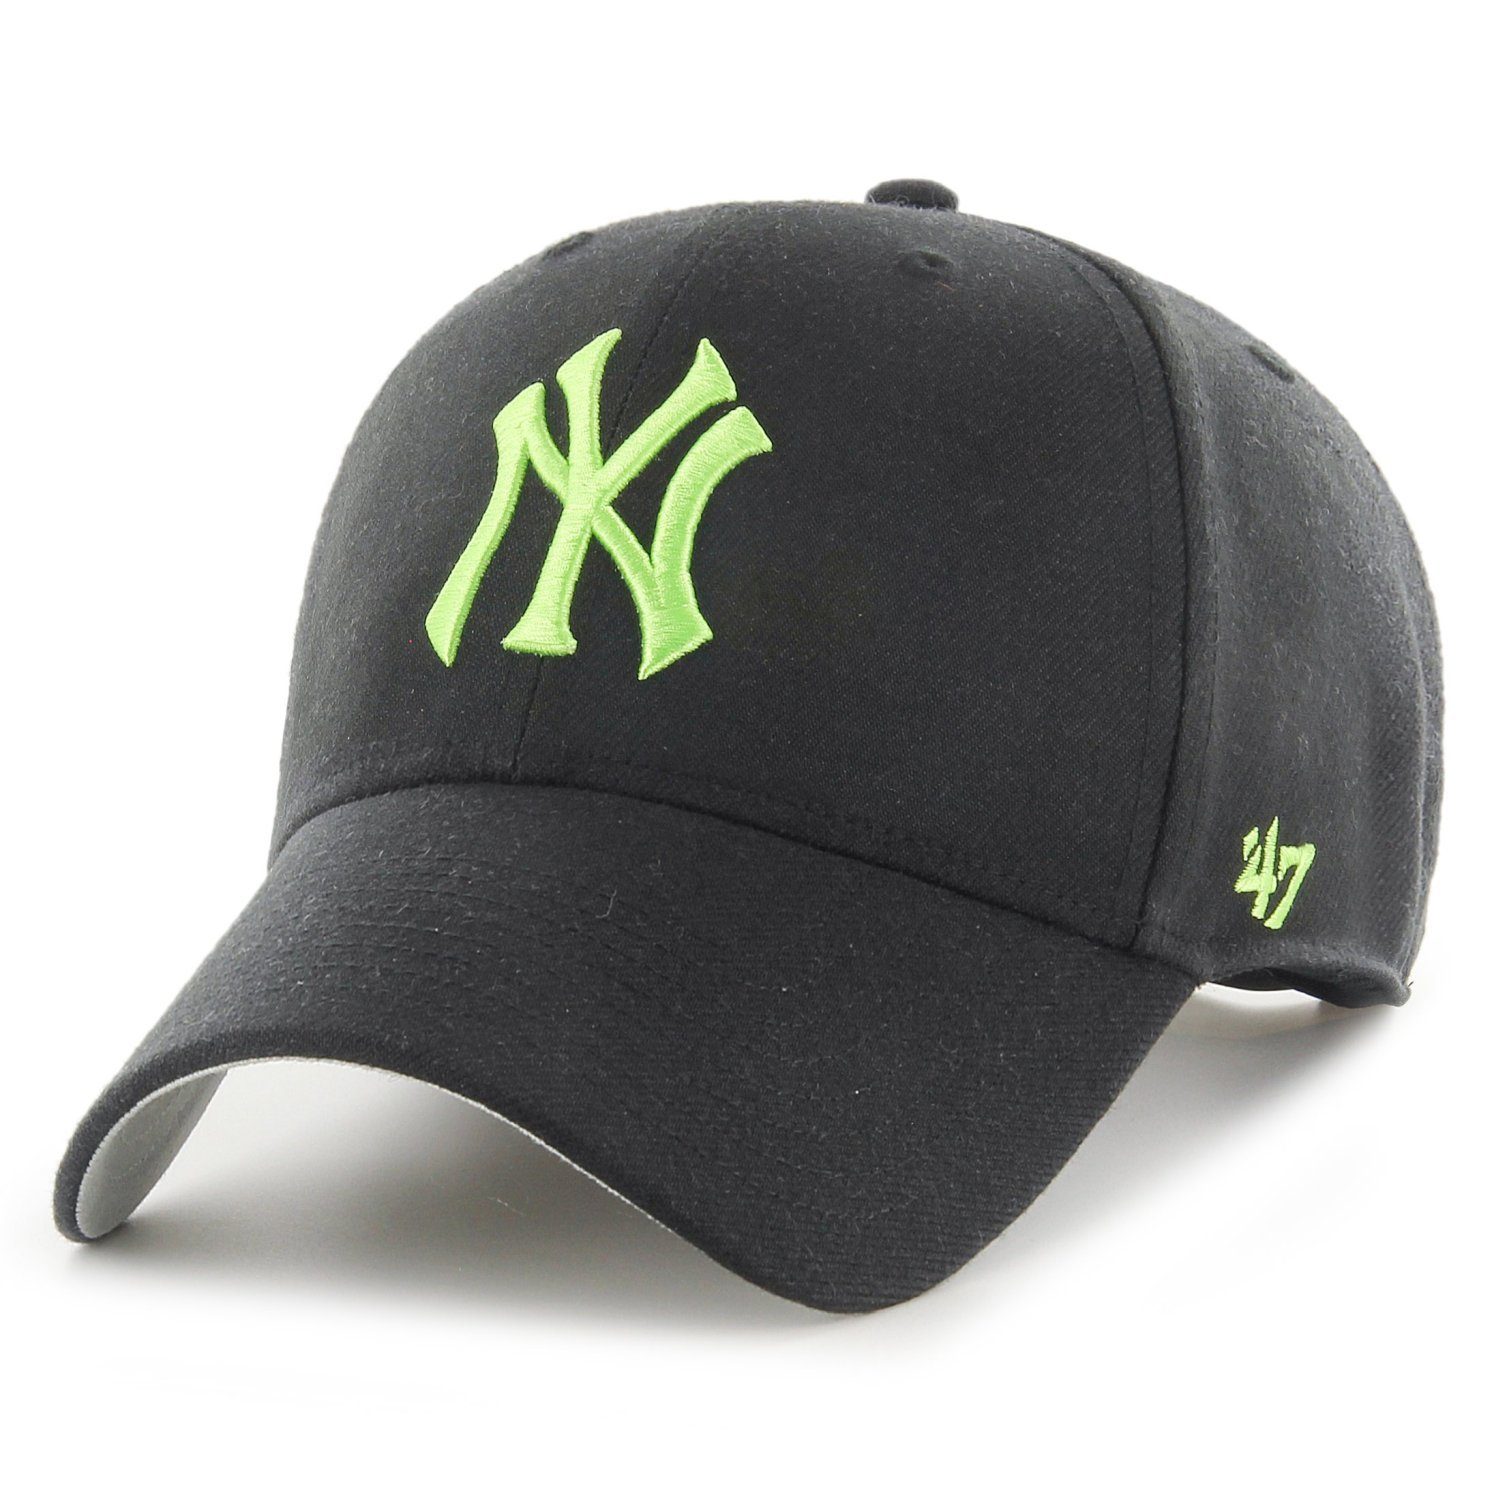 York Cap MLB '47 Brand Yankees Snapback New lime